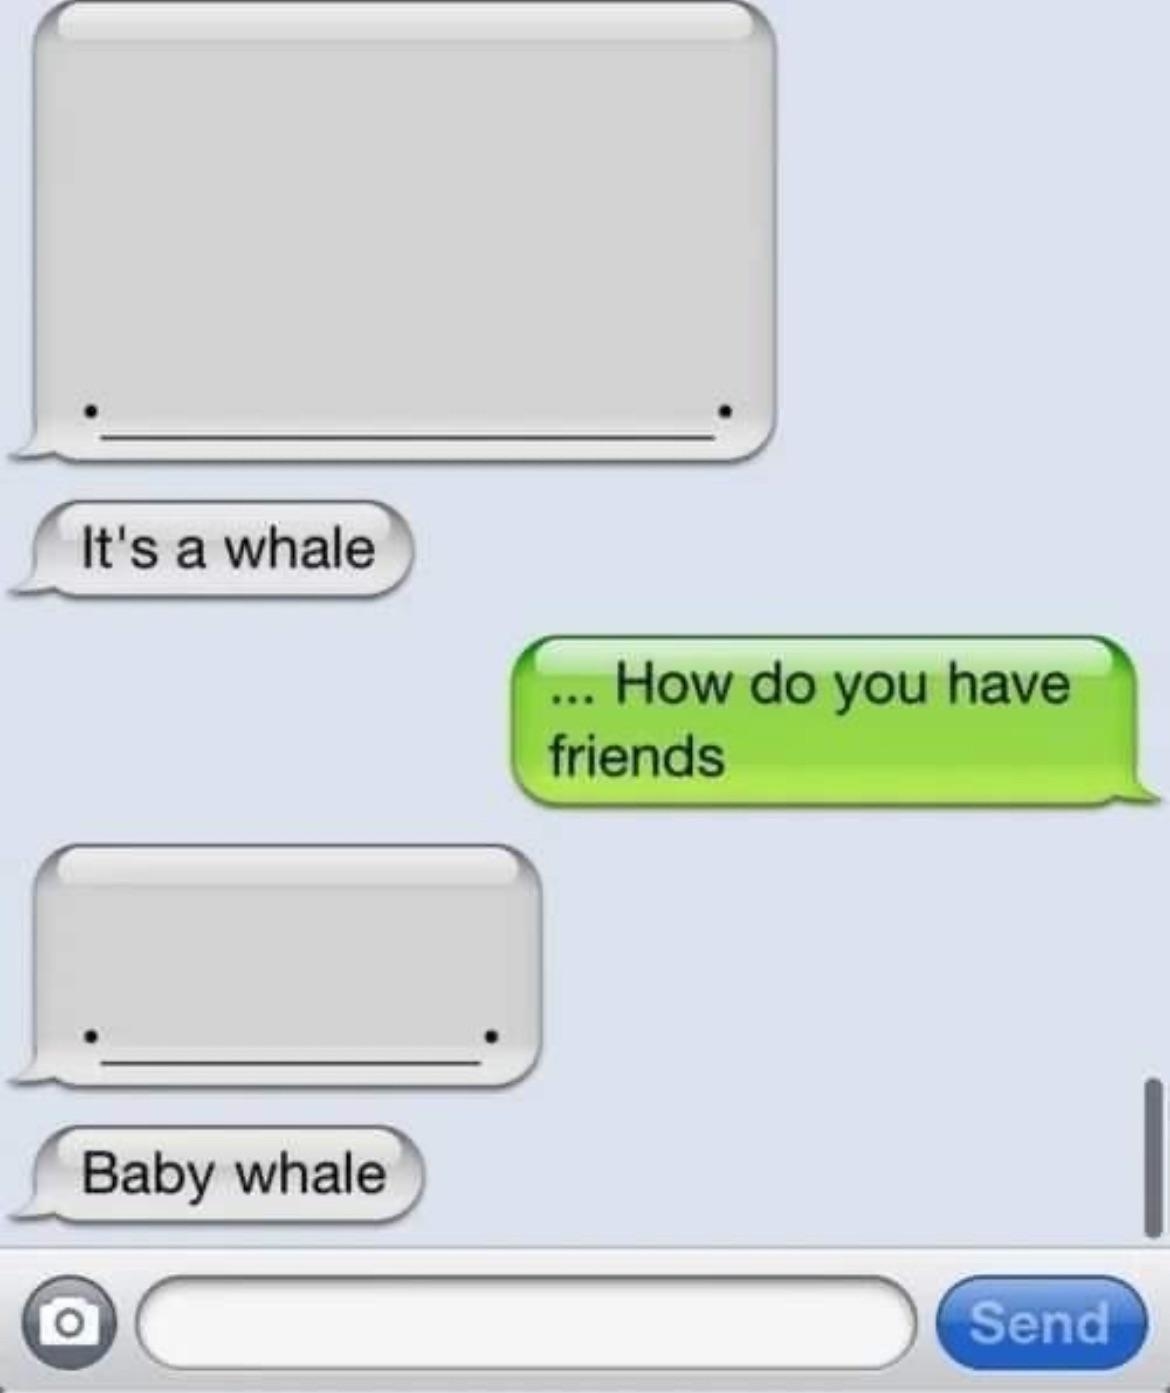 &quot;Baby whale&quot;